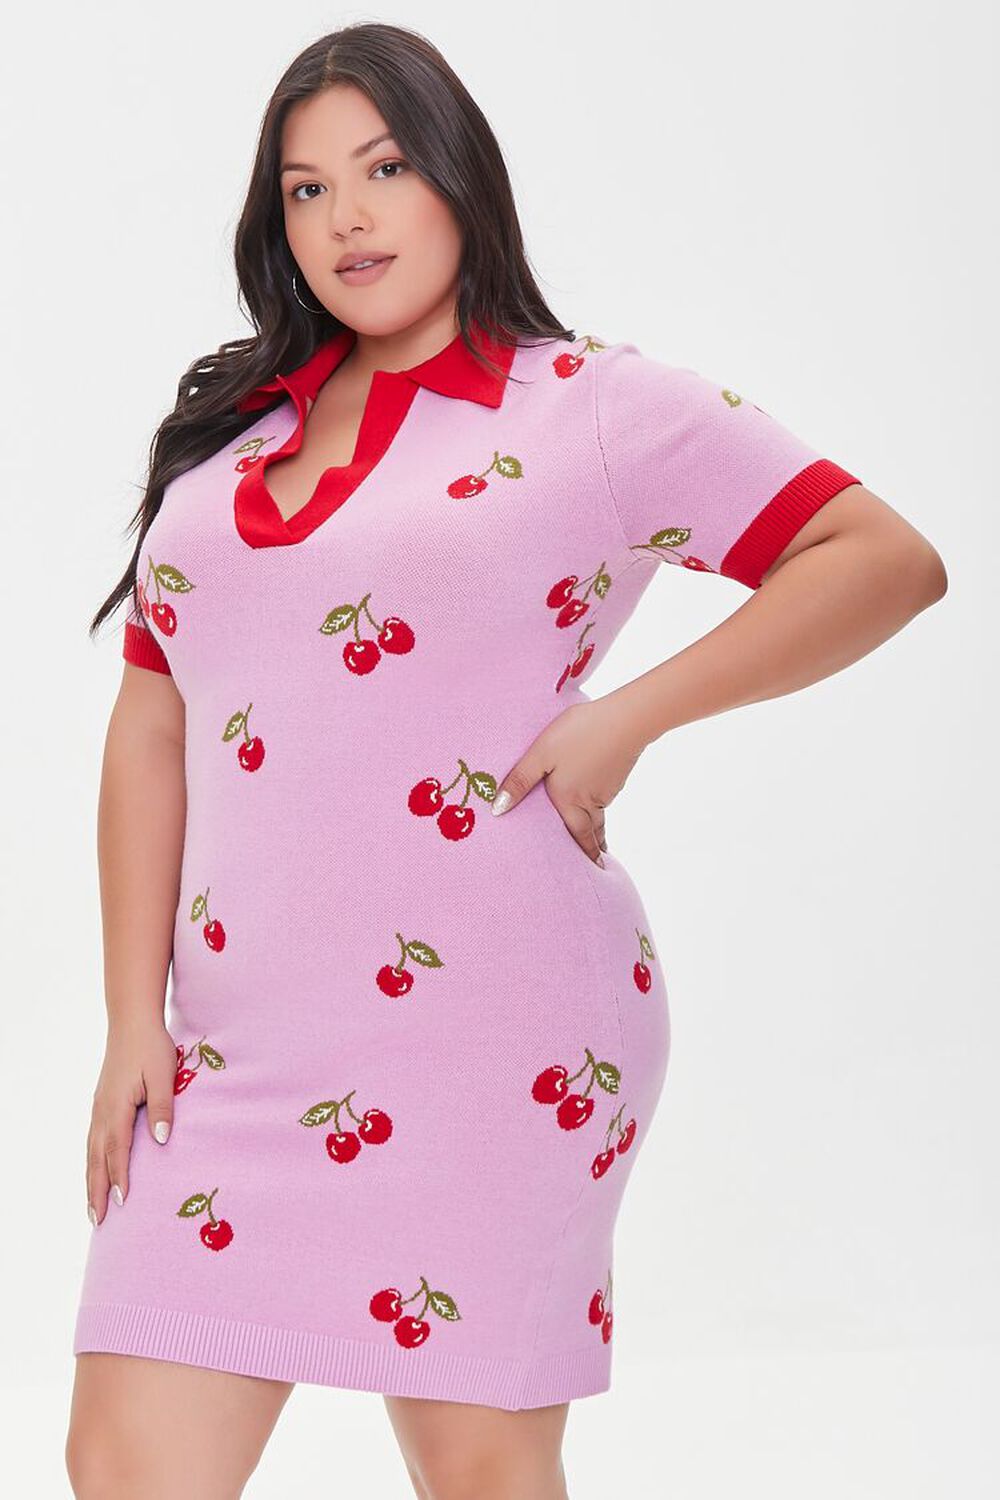 PINK/MULTI Plus Size Cherry Print Sweater Dress, image 1